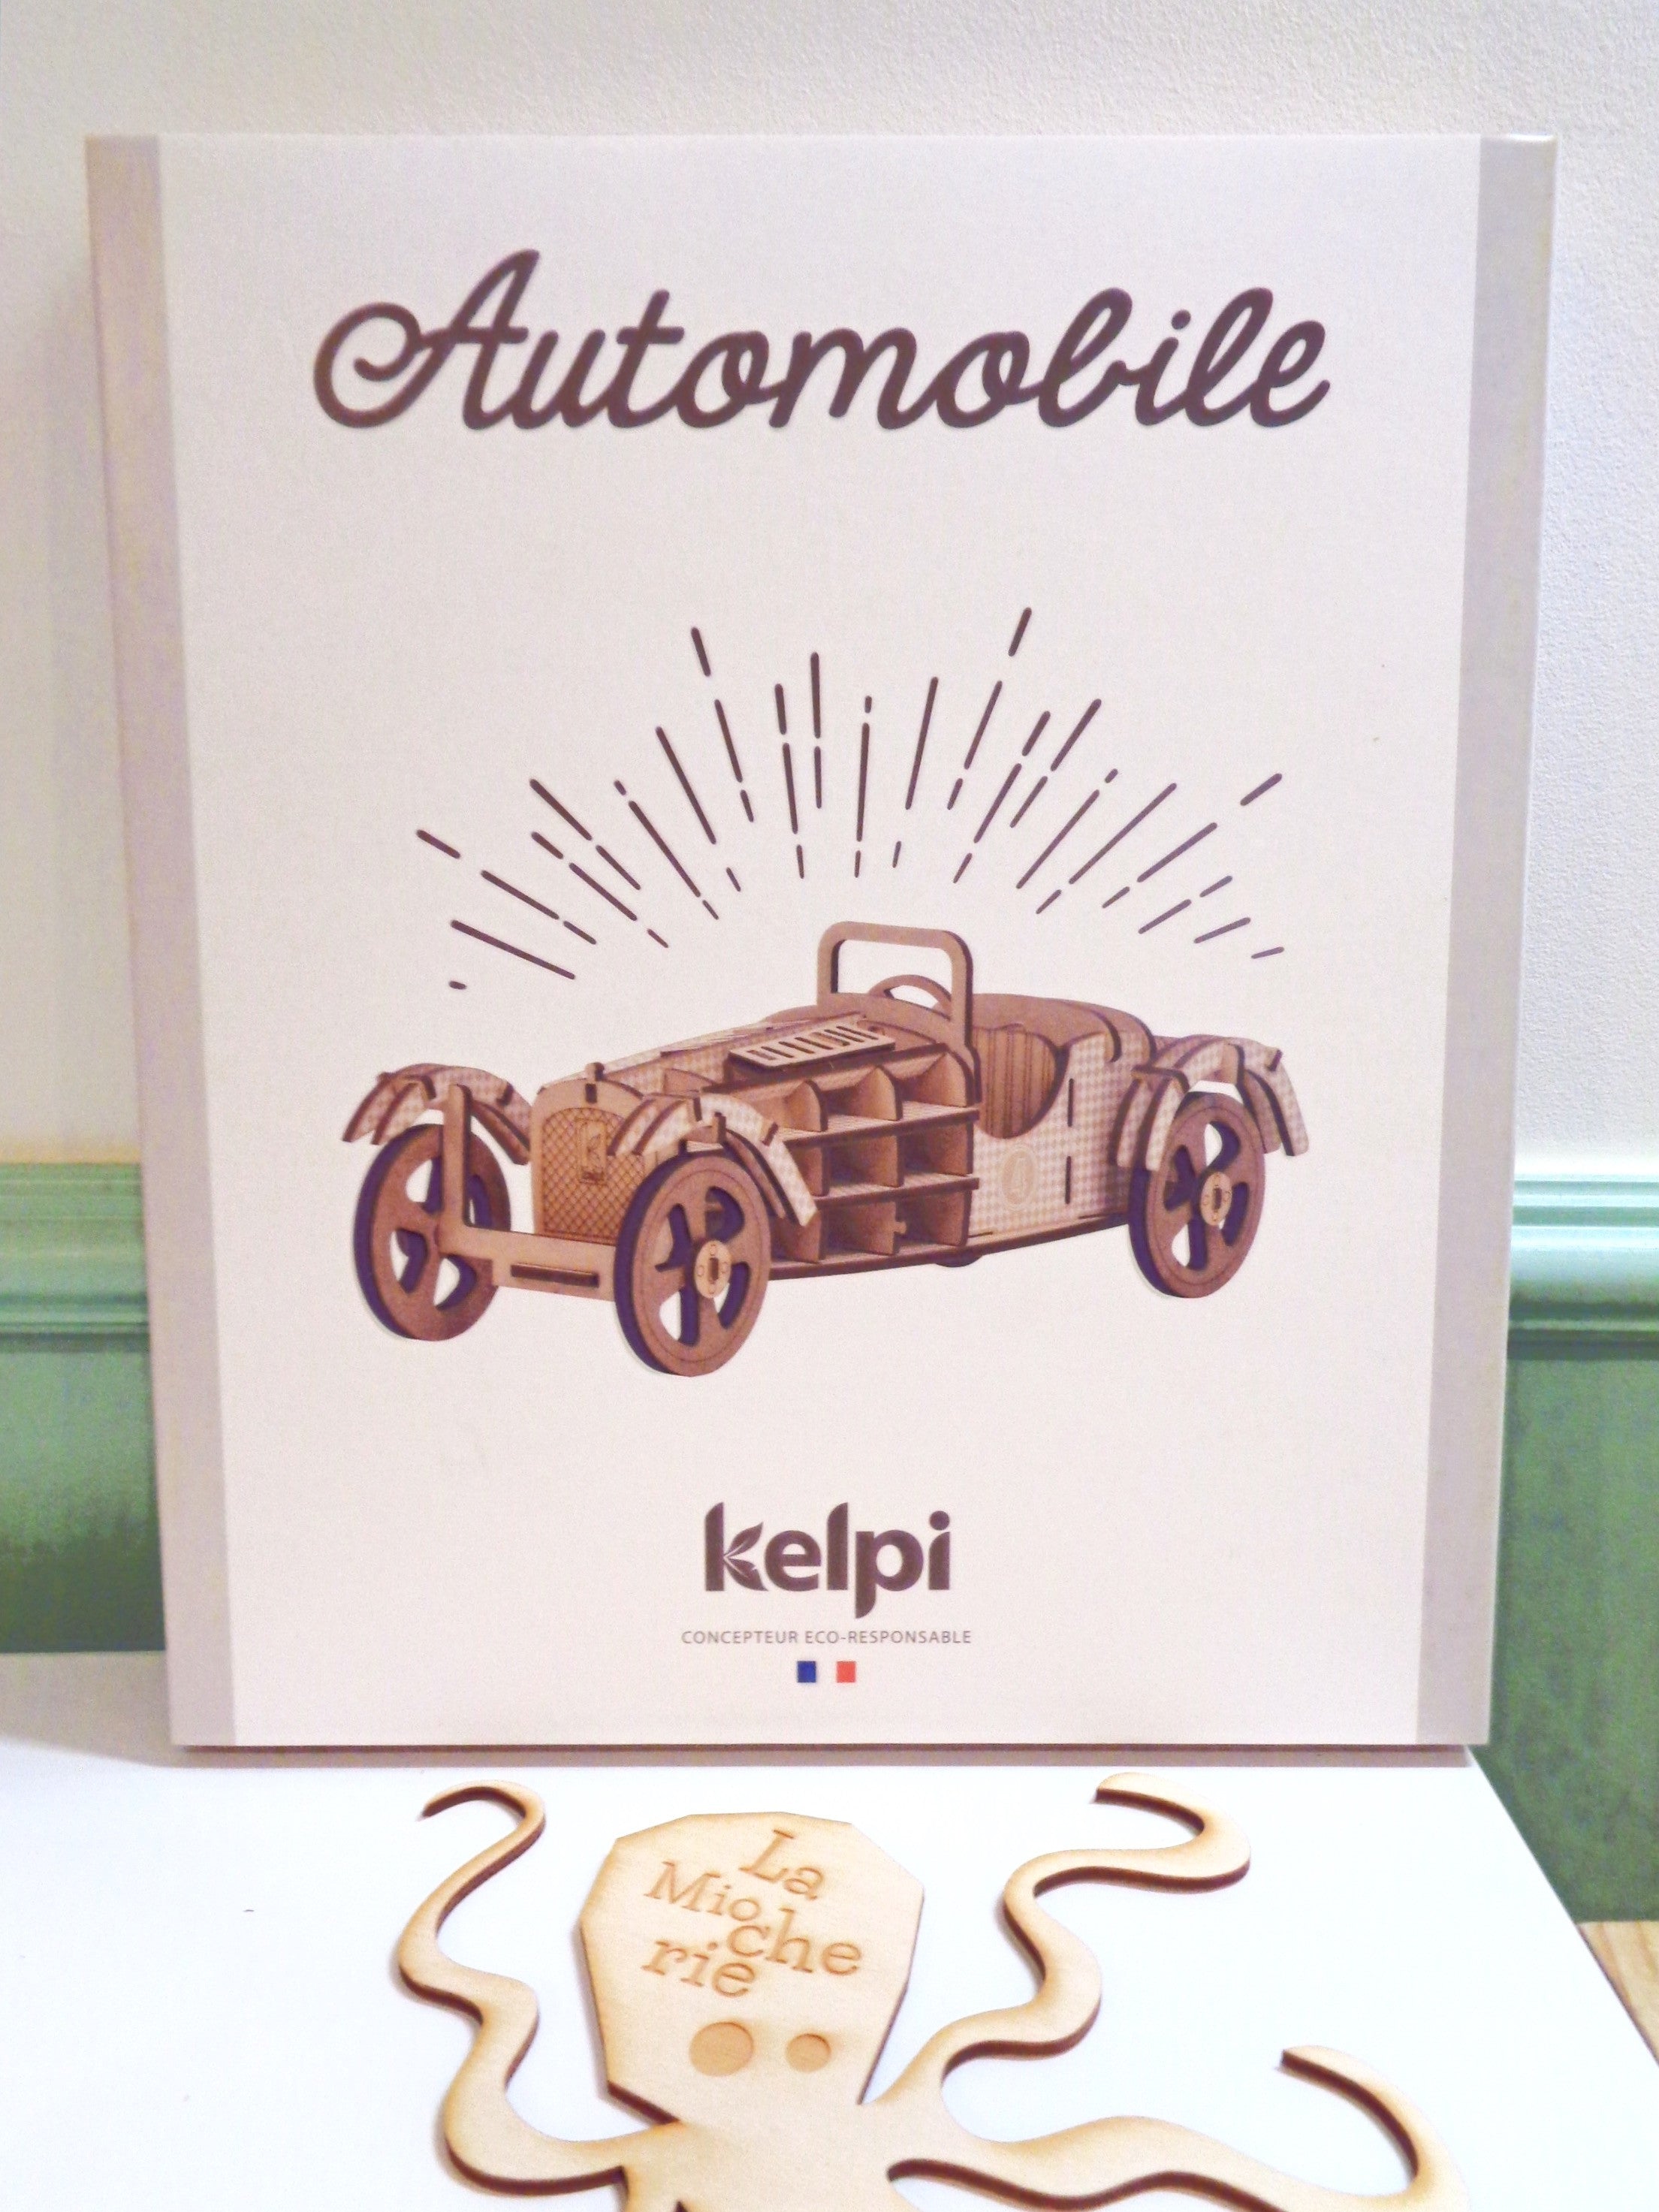 The Automobile model - Kelpi -